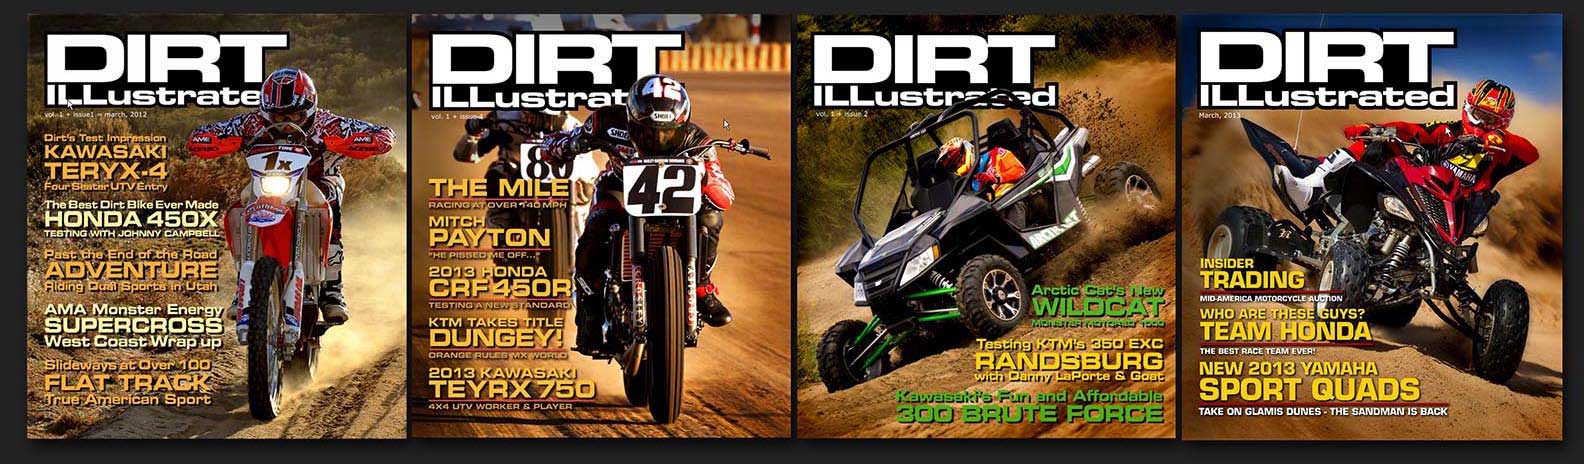 Dirt Illustrated magazine